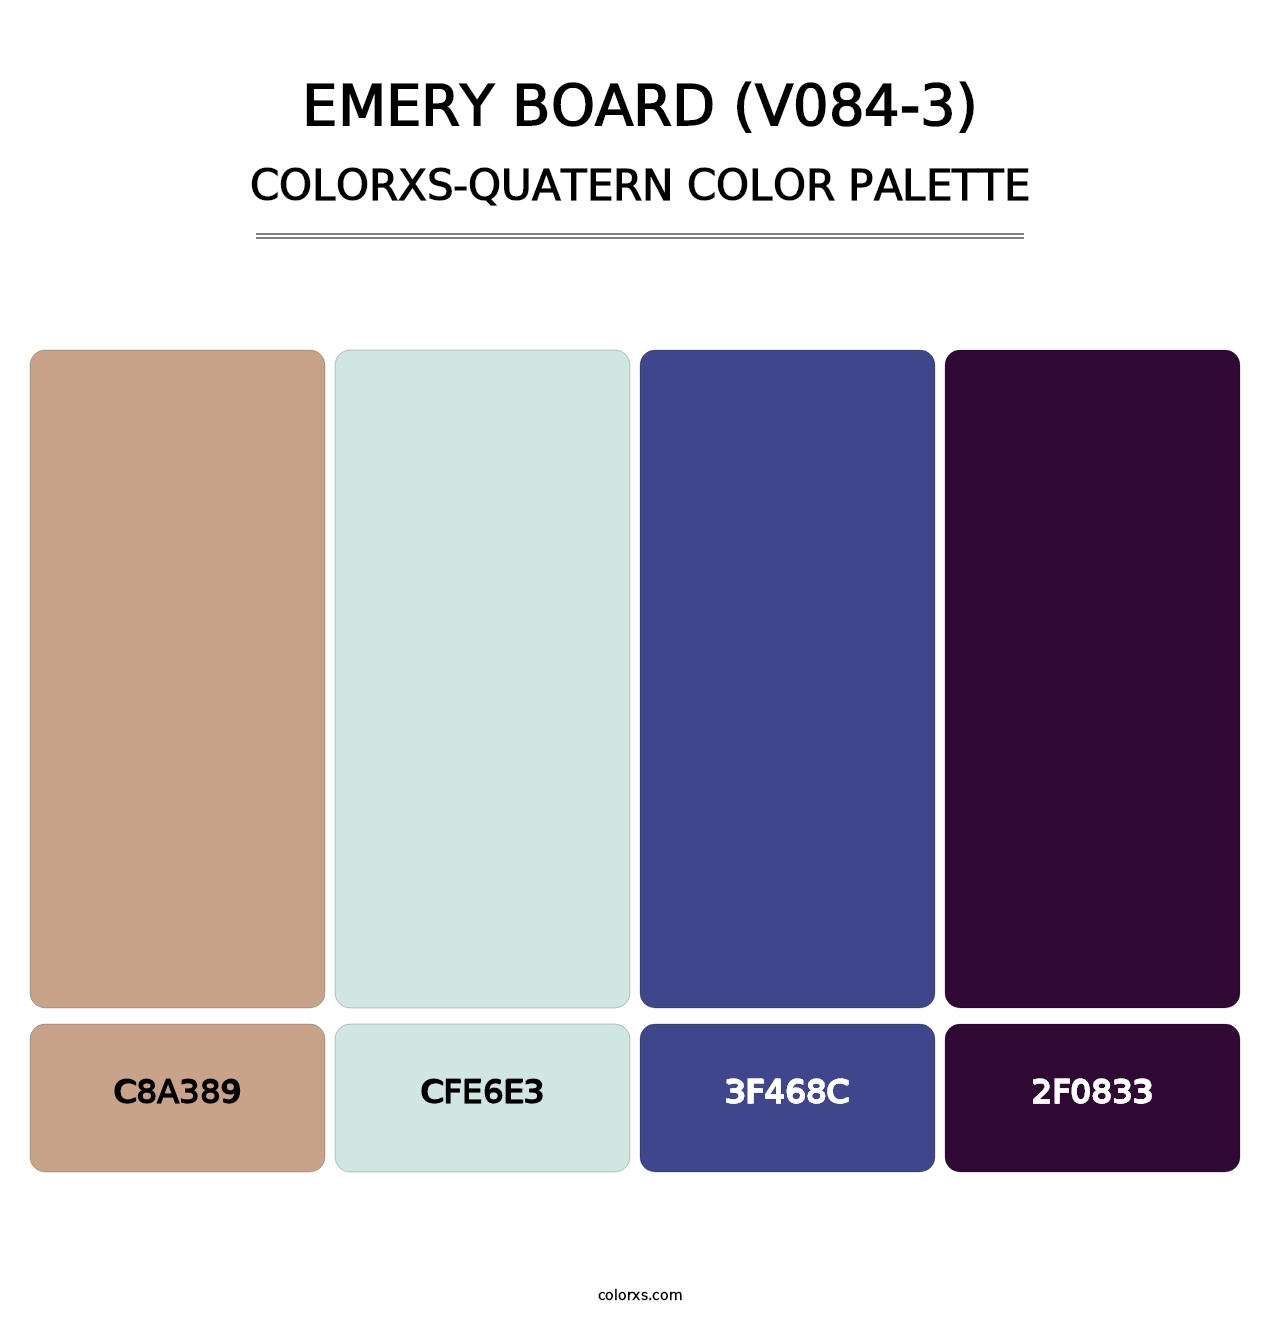 Emery Board (V084-3) - Colorxs Quatern Palette